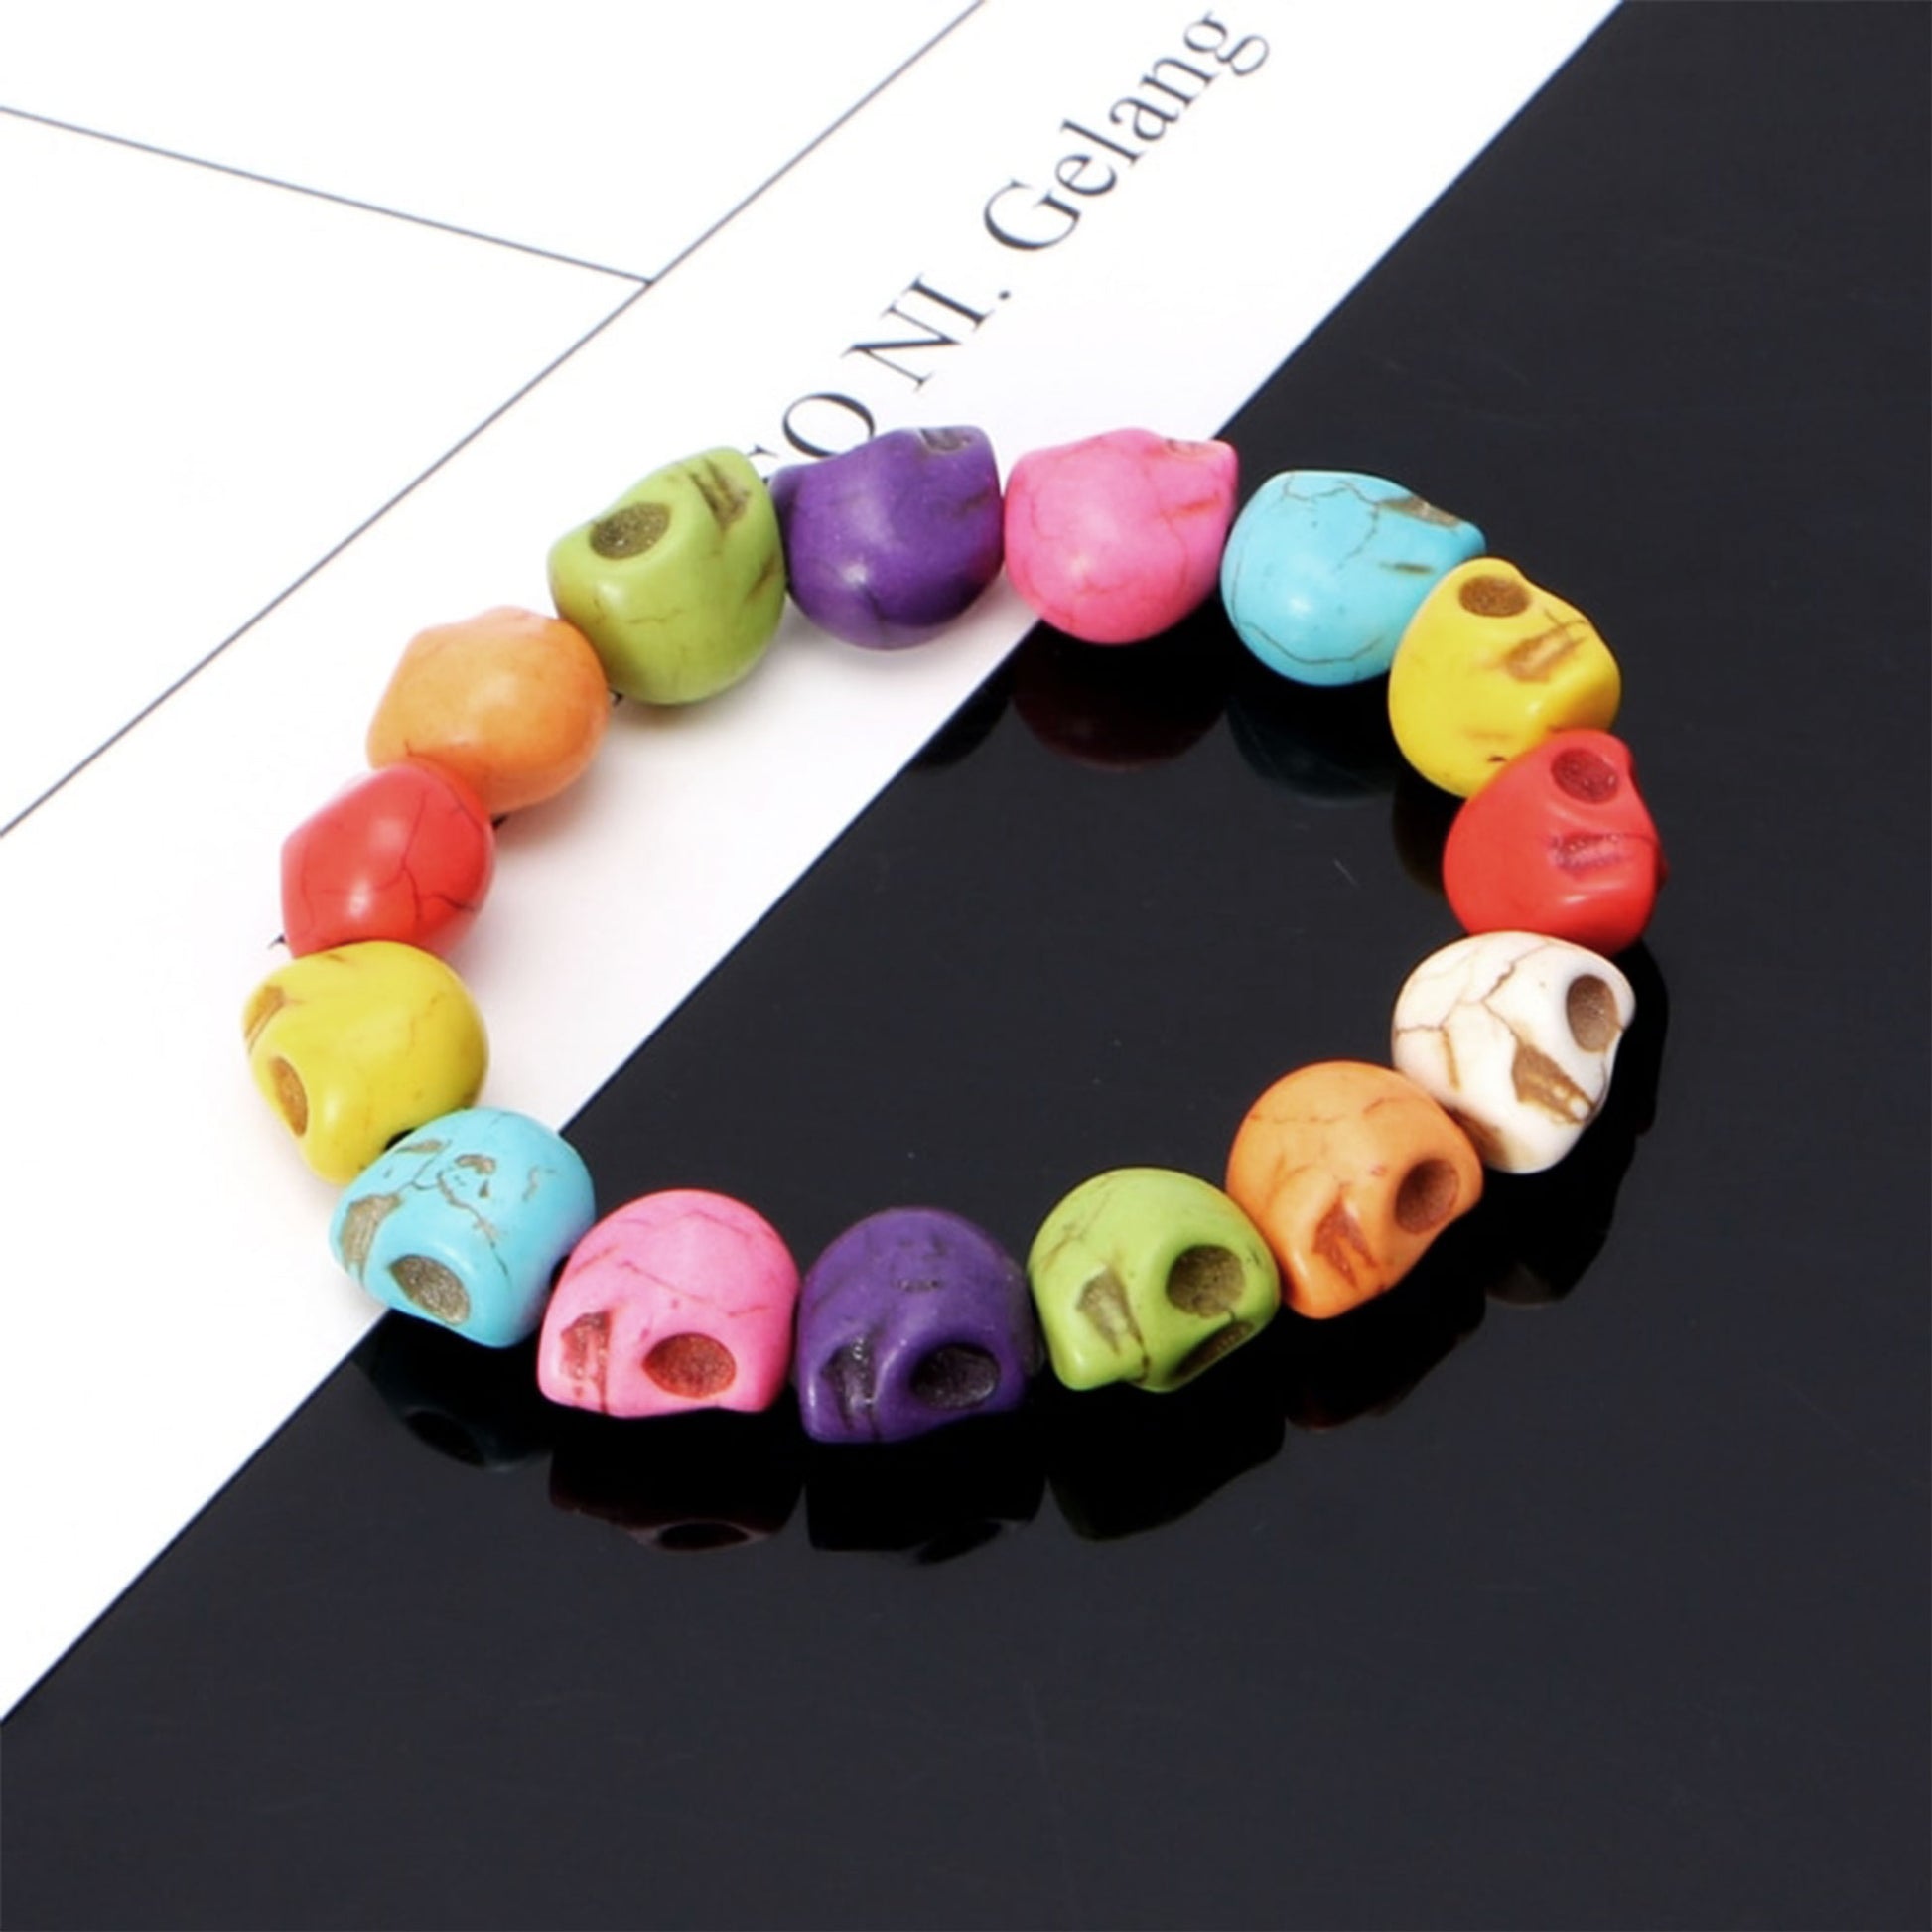 skull bracelet with colorful stone beads for Girls. Trendy Day of the Dead Mexican Jewelry. Brazalete de calaveras Dia de Muertos joyeria mexicana para mujer. Fridamaniacs Frida Inspired wristband accessory